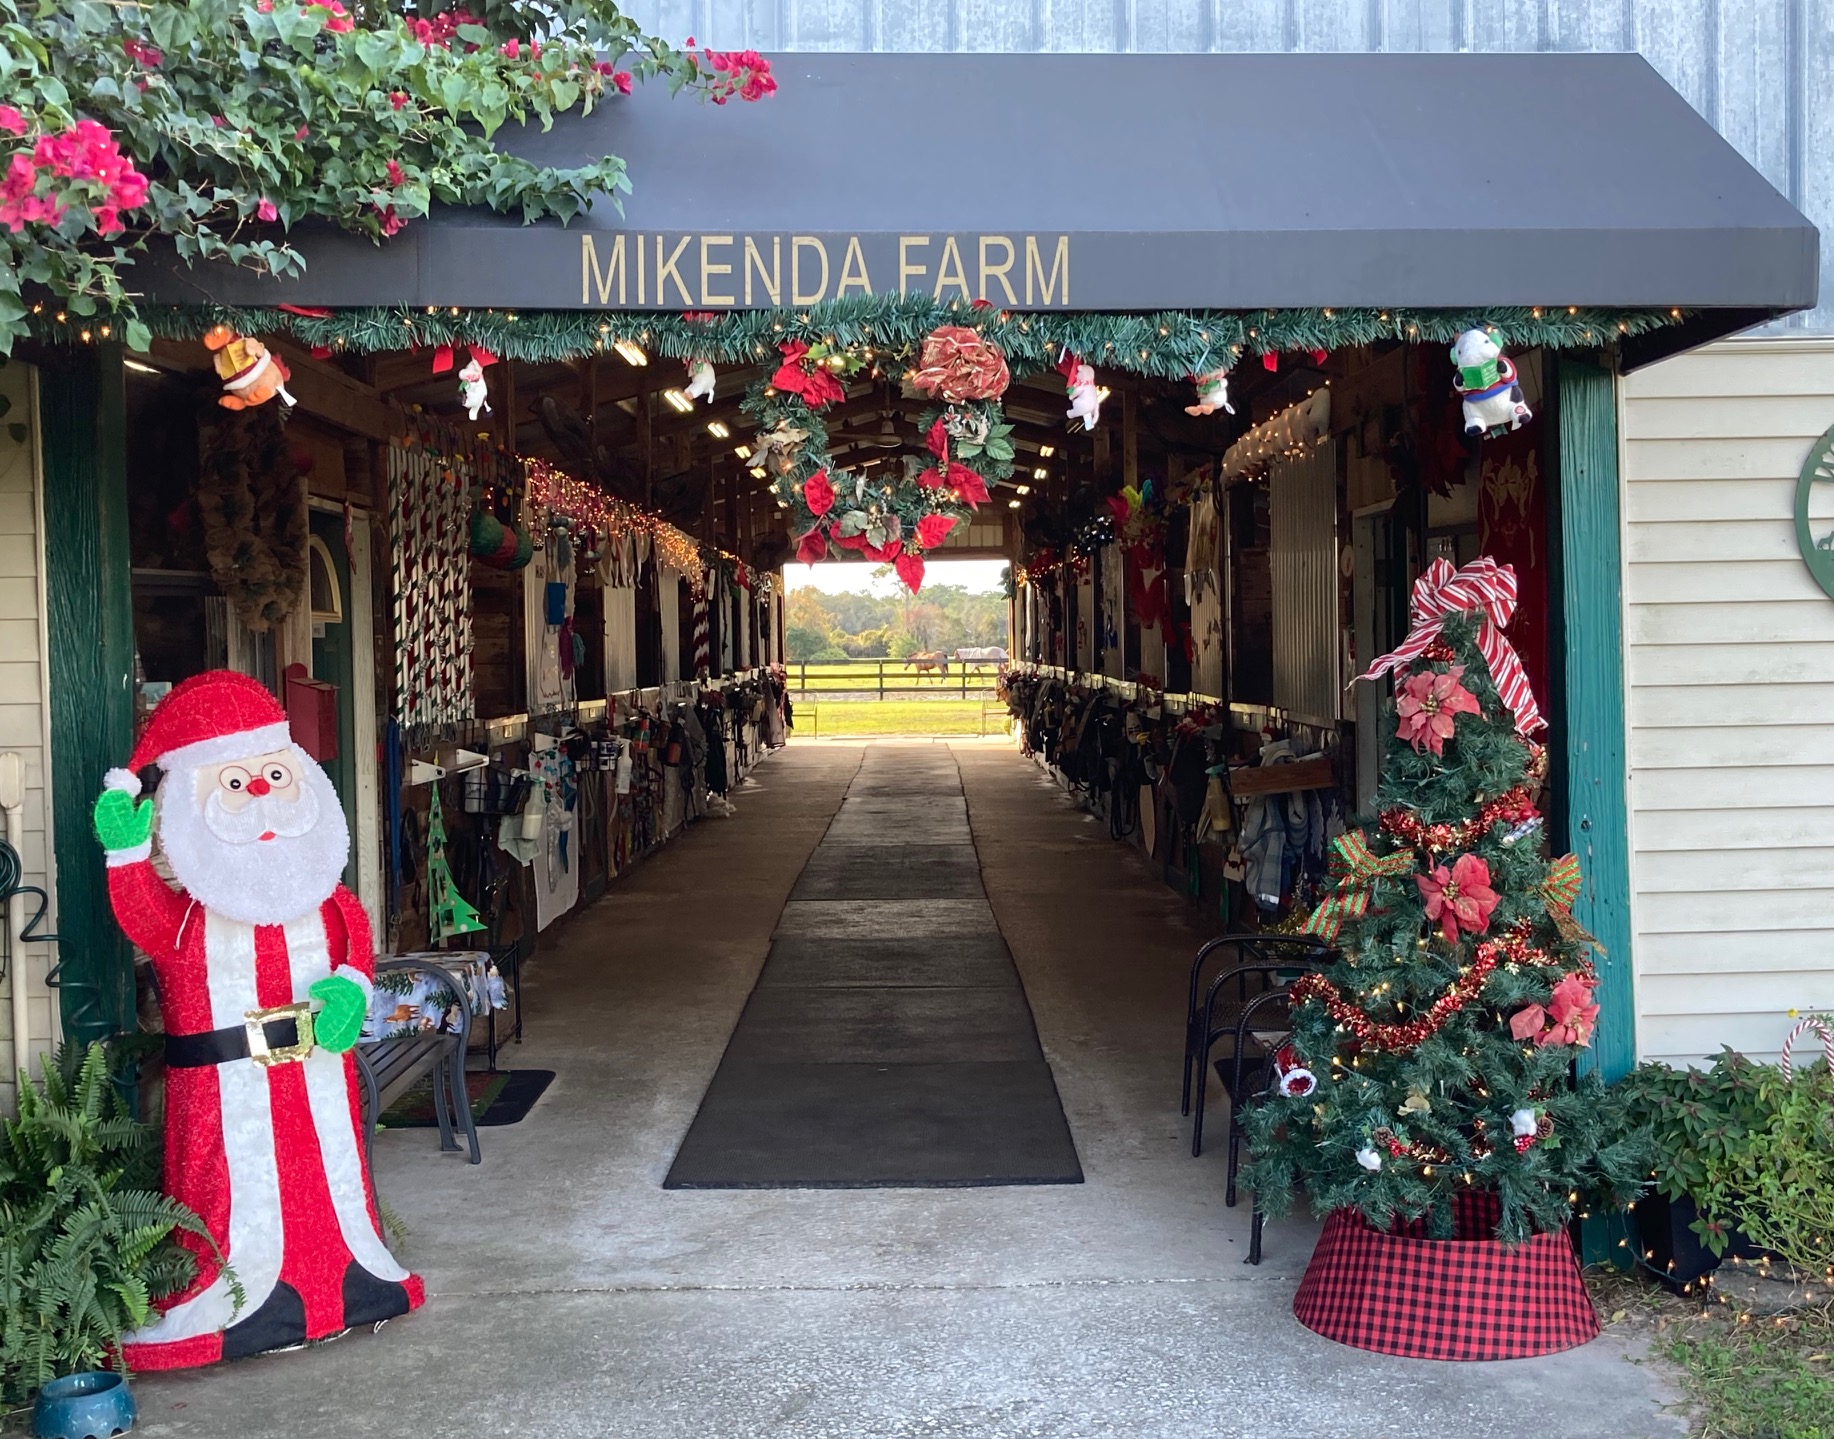 Fourth slide: Mikenda Farm Christmas decorations